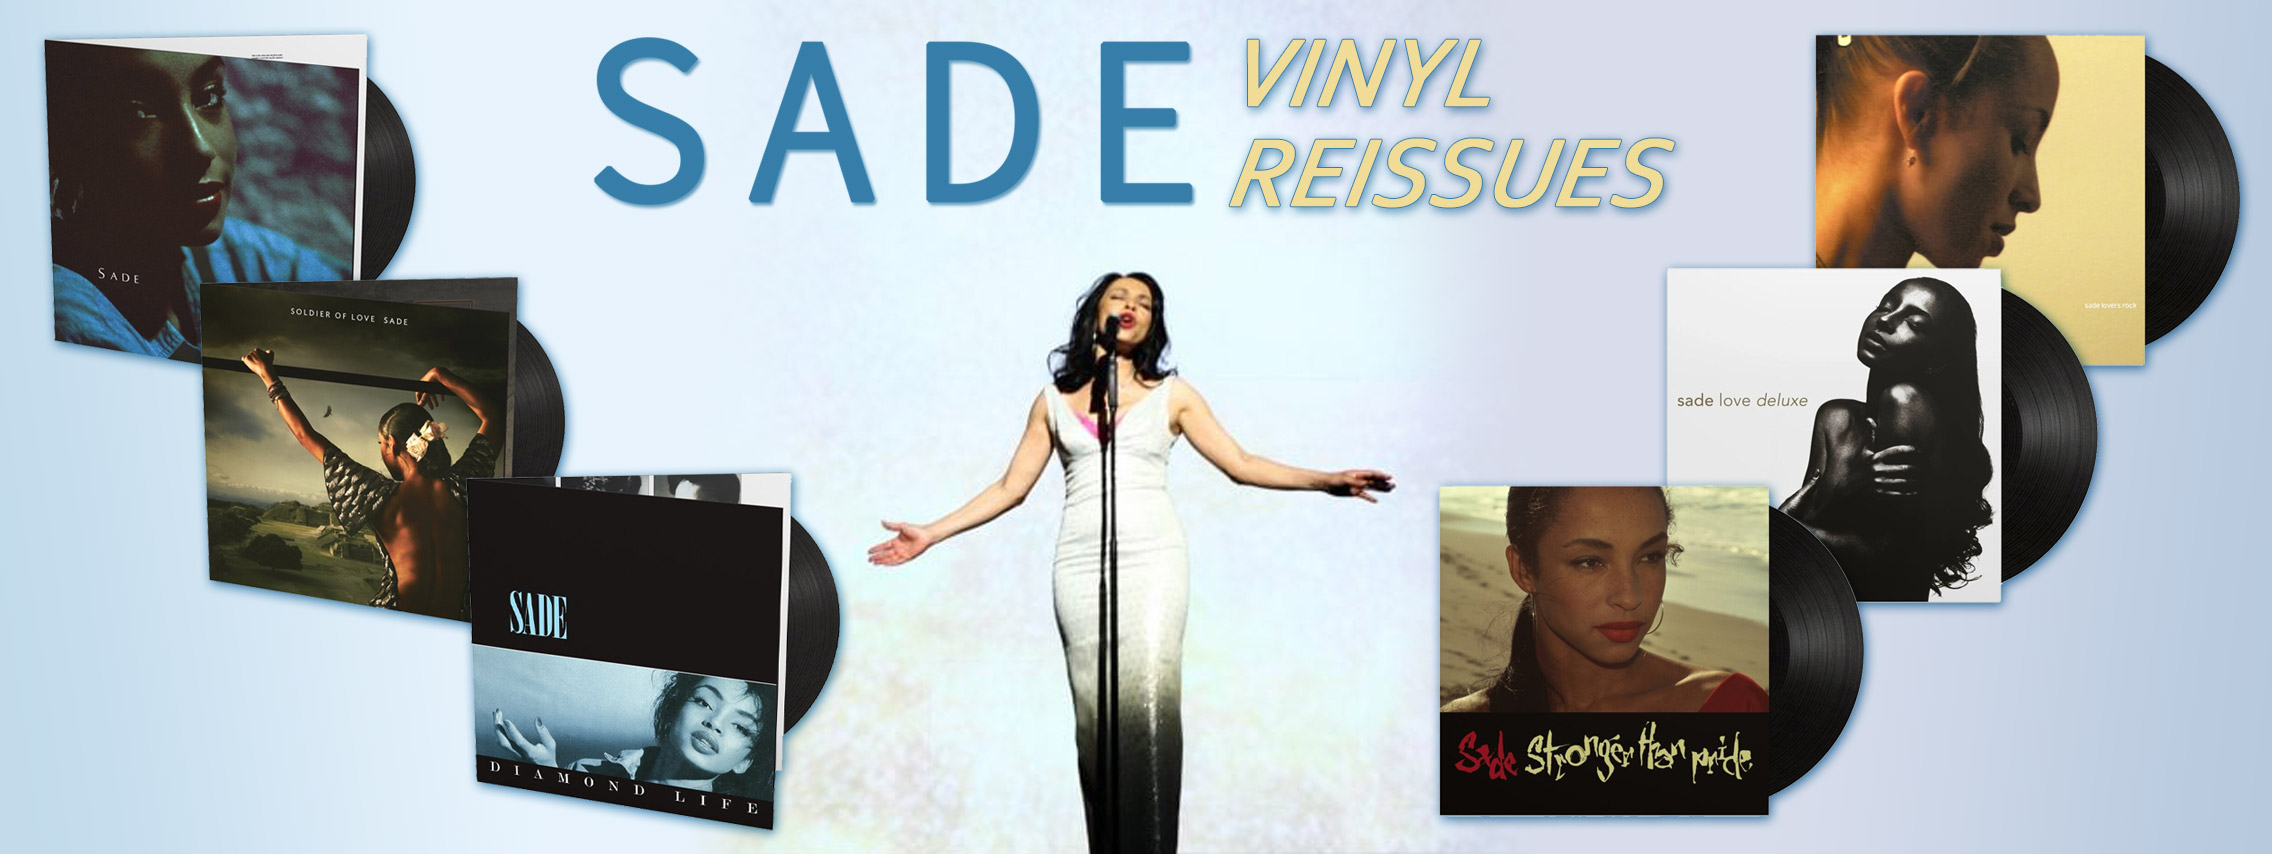 Sade Vinyl Reissues